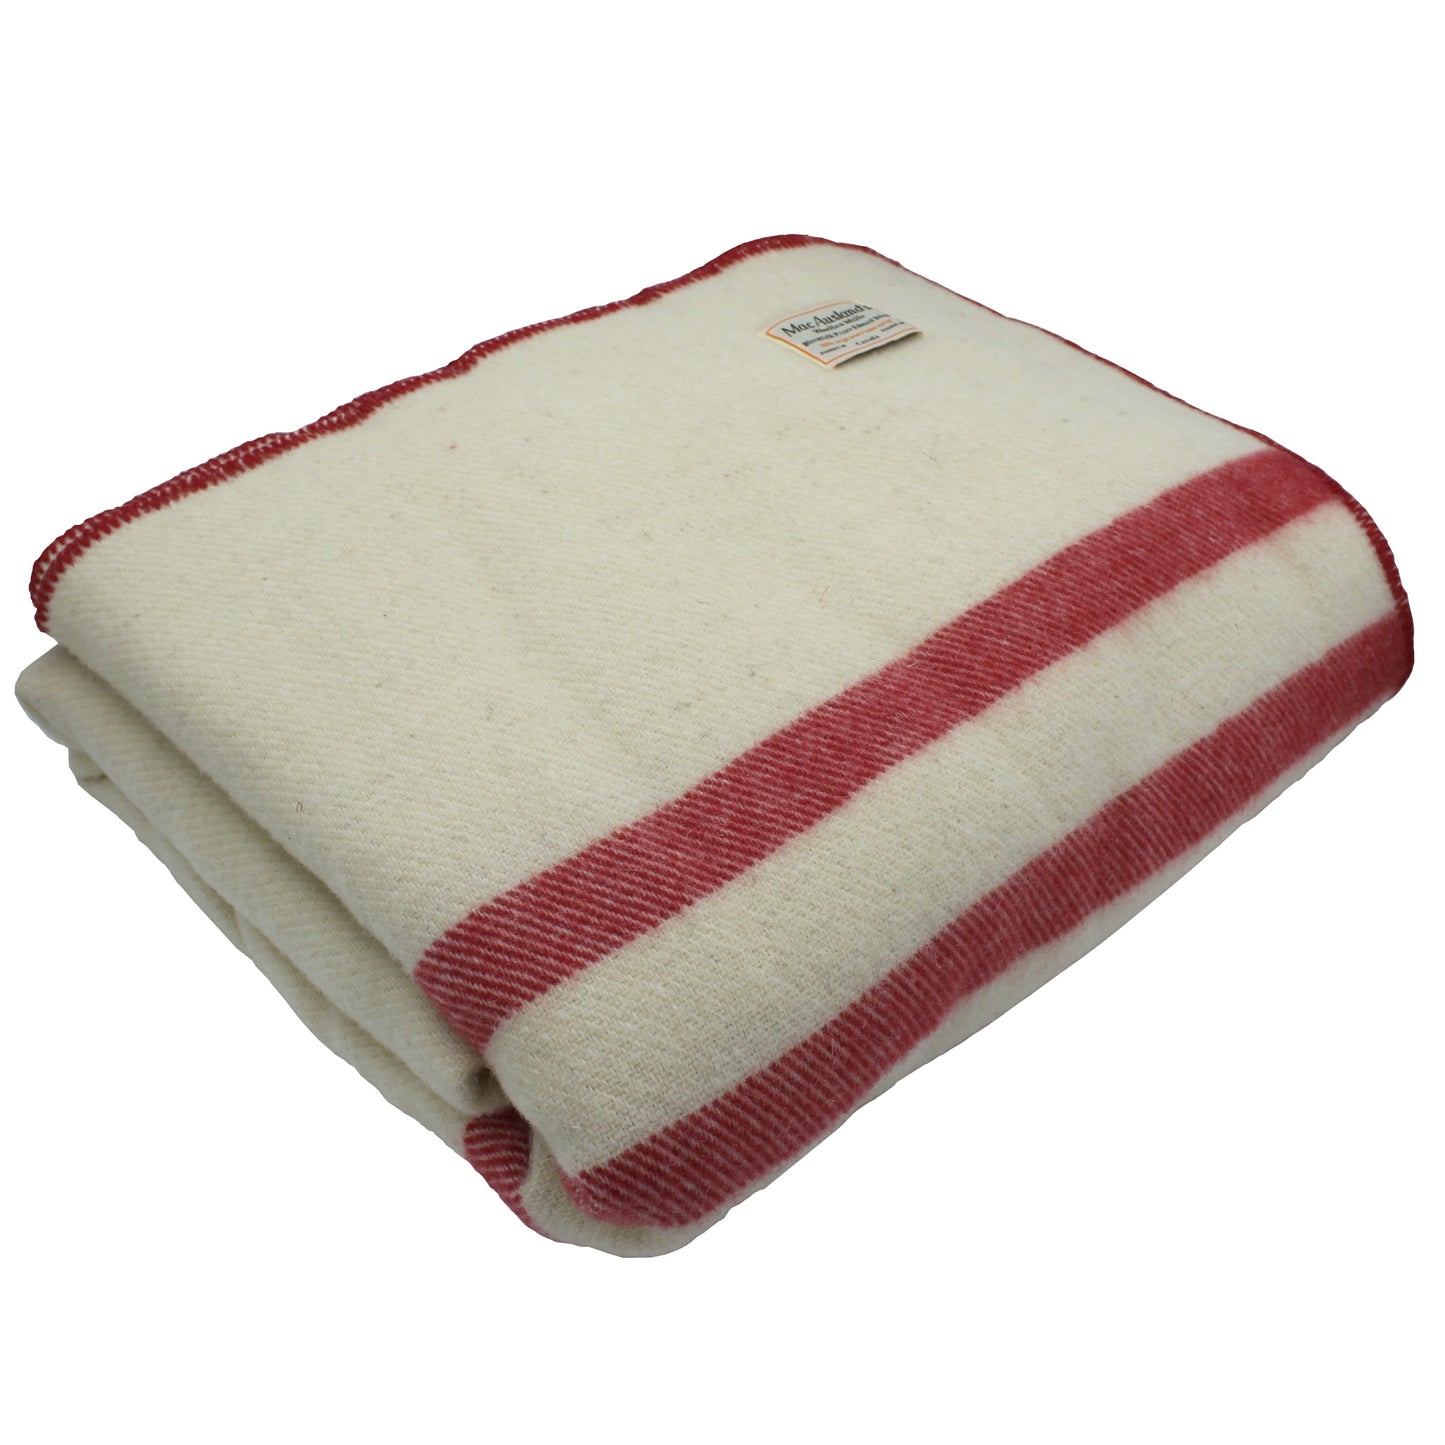 MacAusland's Wool Blanket